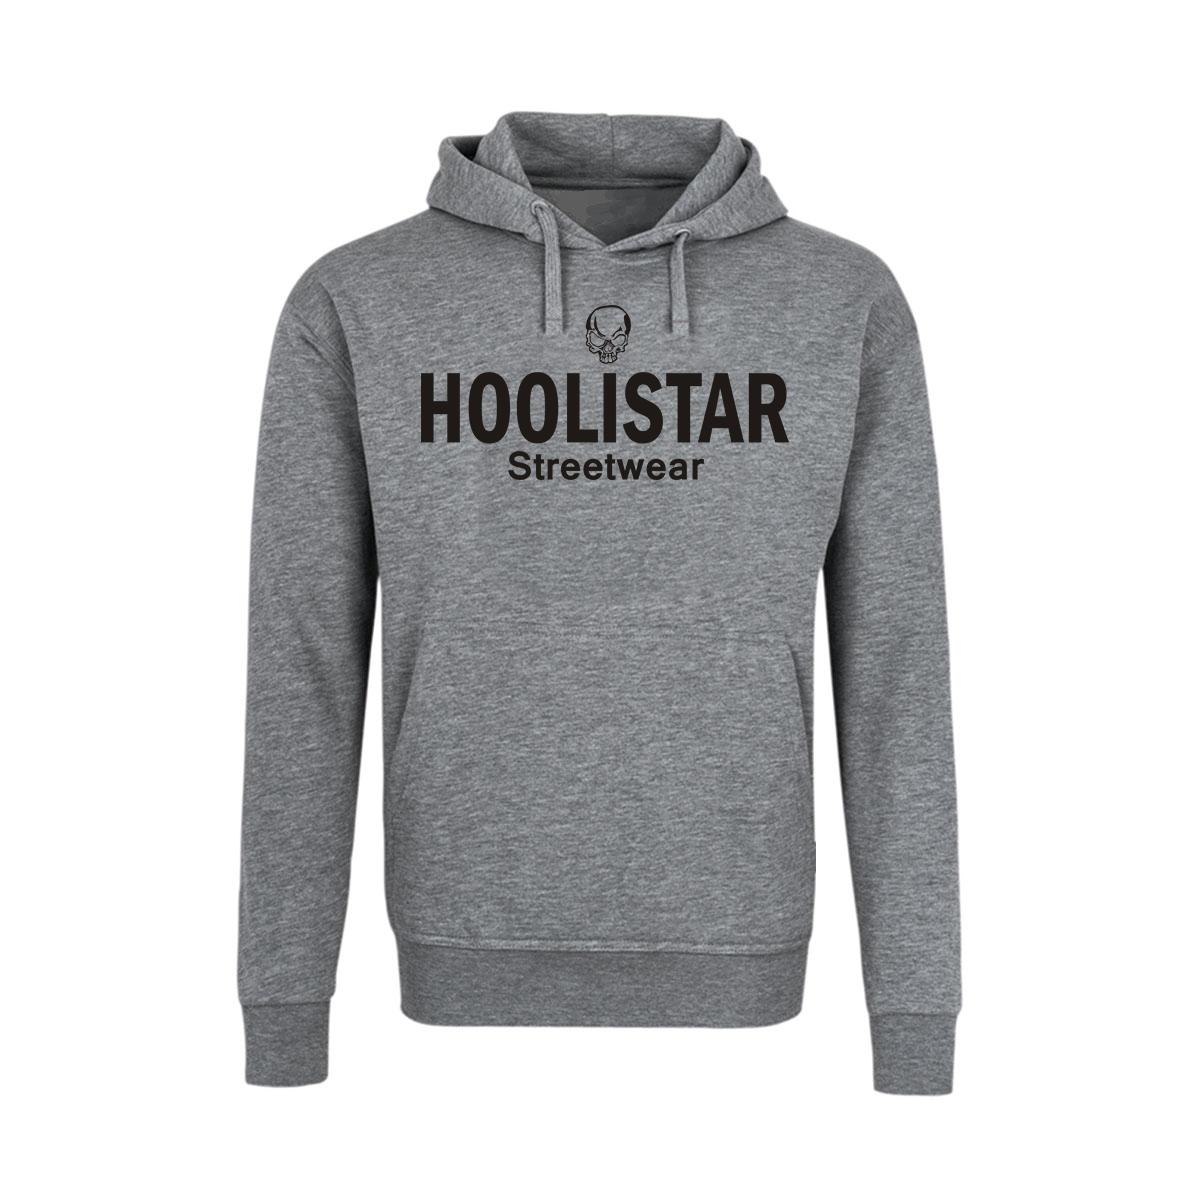 Hoolistar Streetwear - Männer Kapuzenpullover - grau meliert